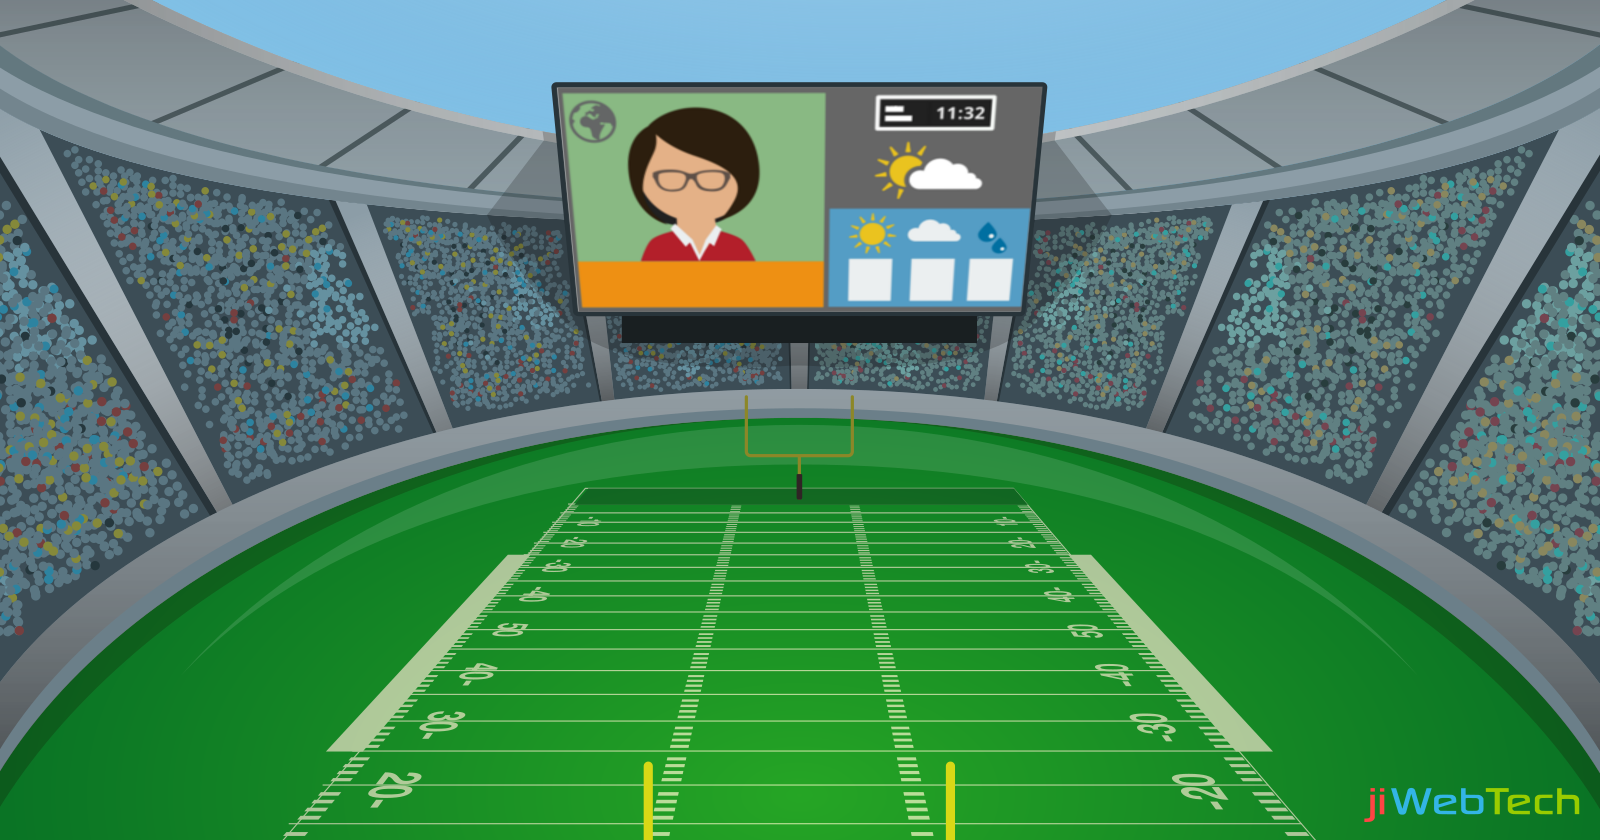 Digital Signage: Enhancing the Stadium Experience Efficiently